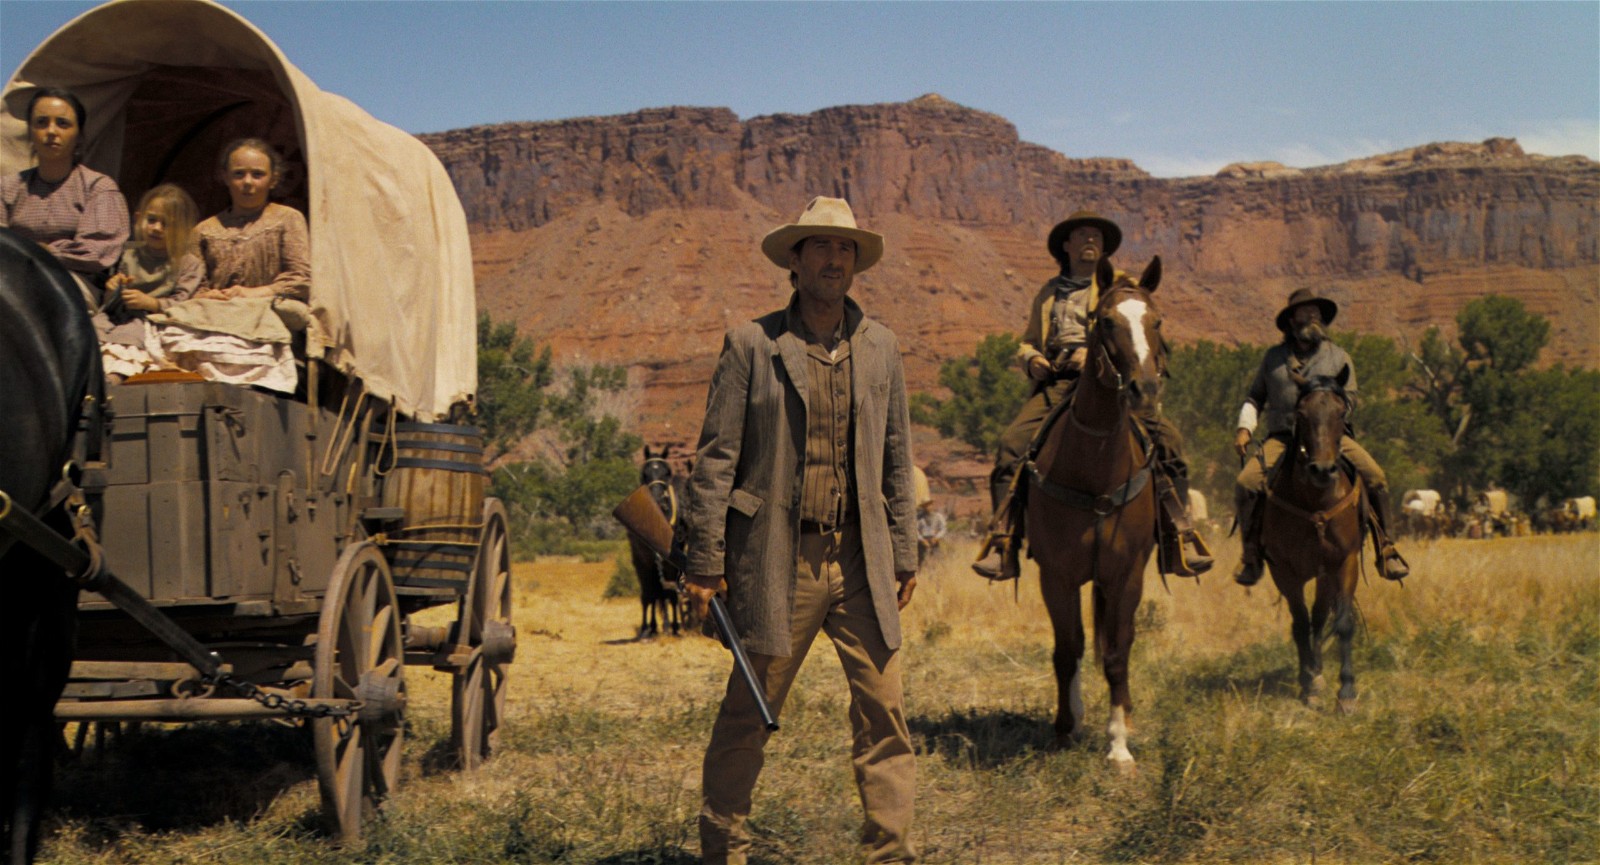 Kevin Costner in Horizon: An American Saga [Credit: Warner Bros. Pictures]